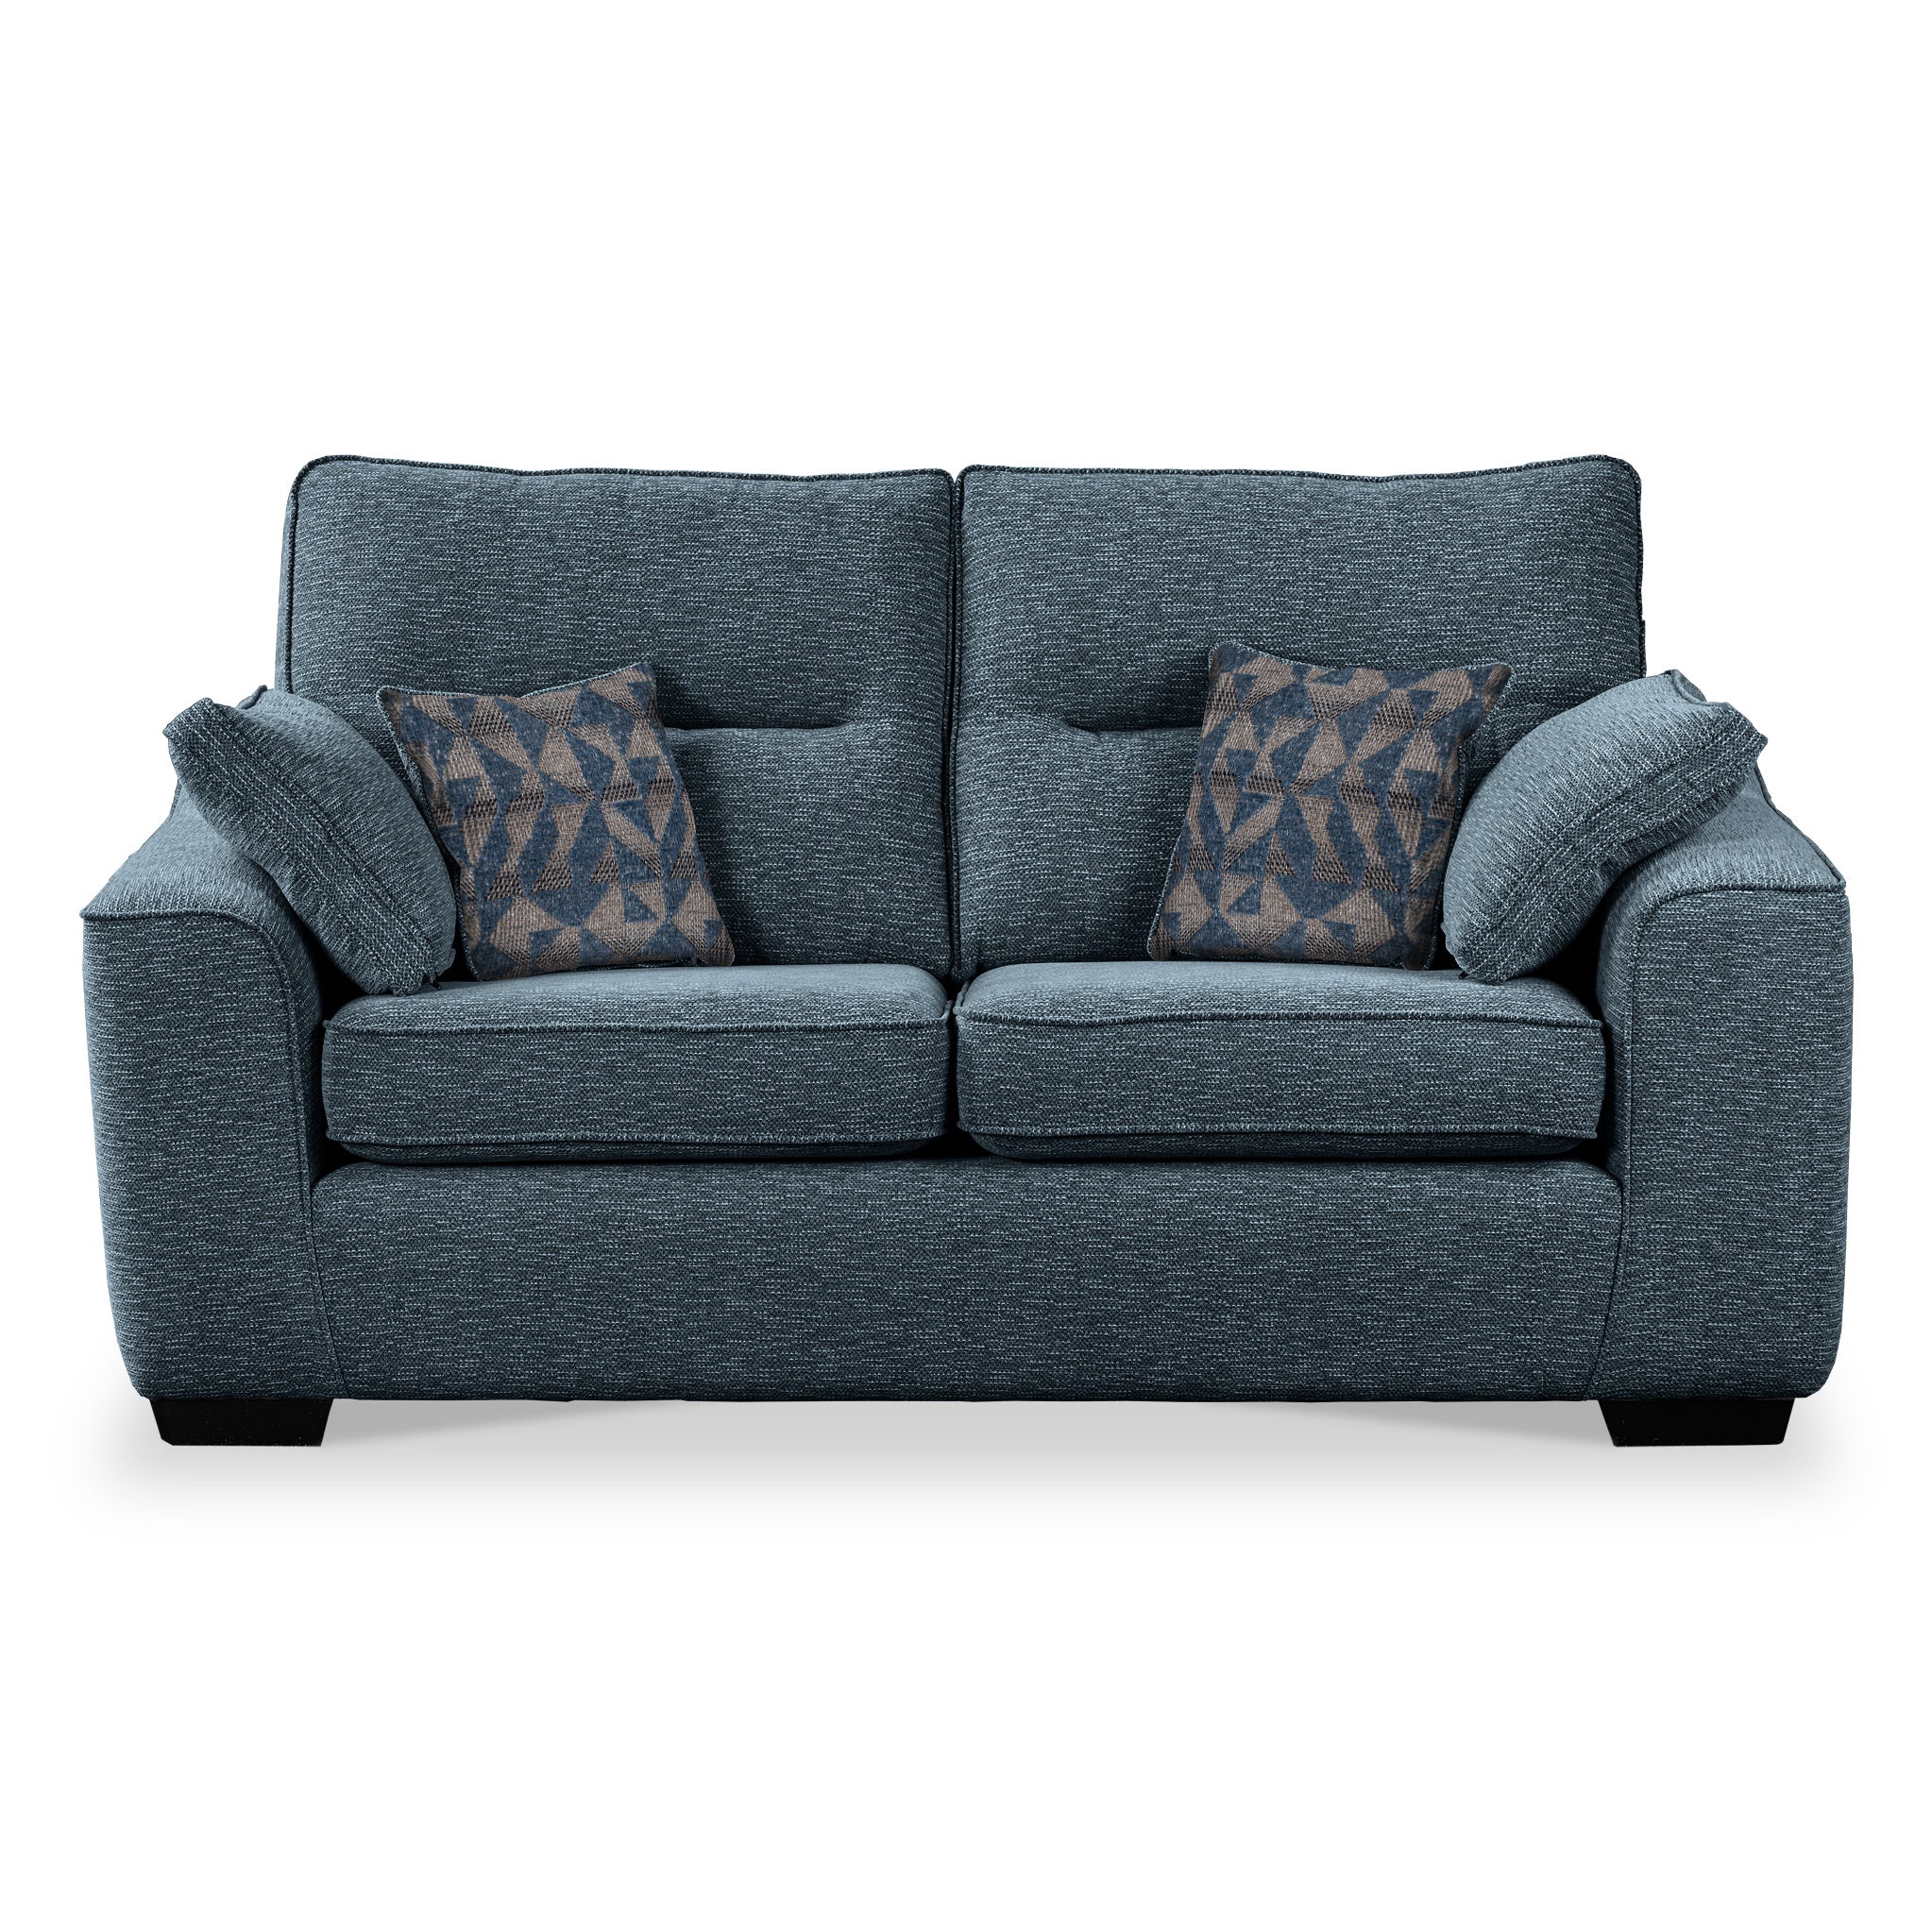 Sudbury Fabric 2 Seater Sofa Bed Blue Grey Beige More Roseland